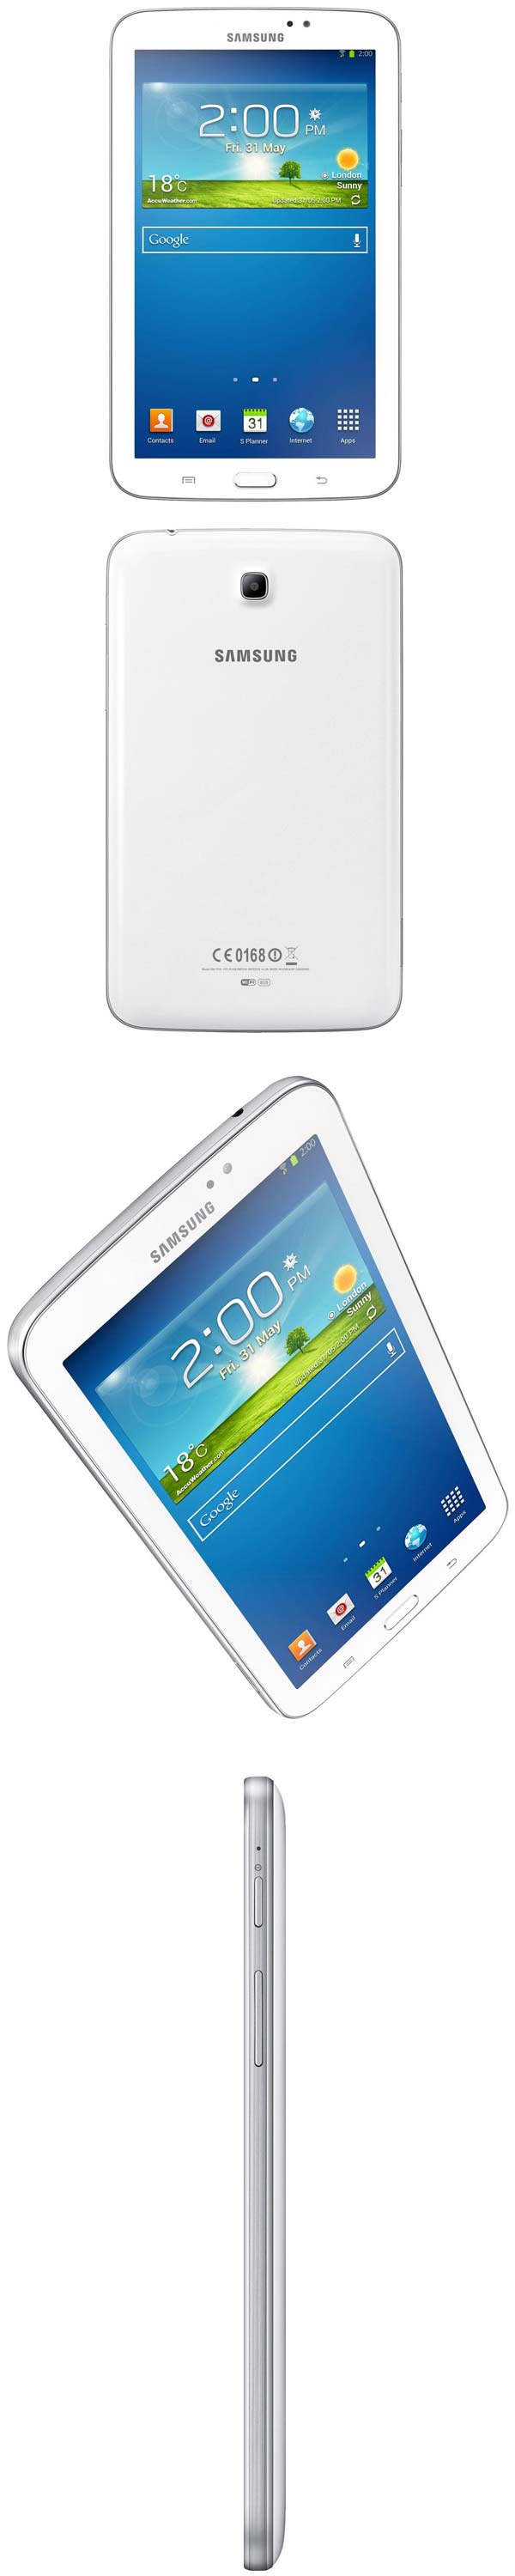 Хорошие фотографии планшета Samsung Galaxy Tab 3 Lite